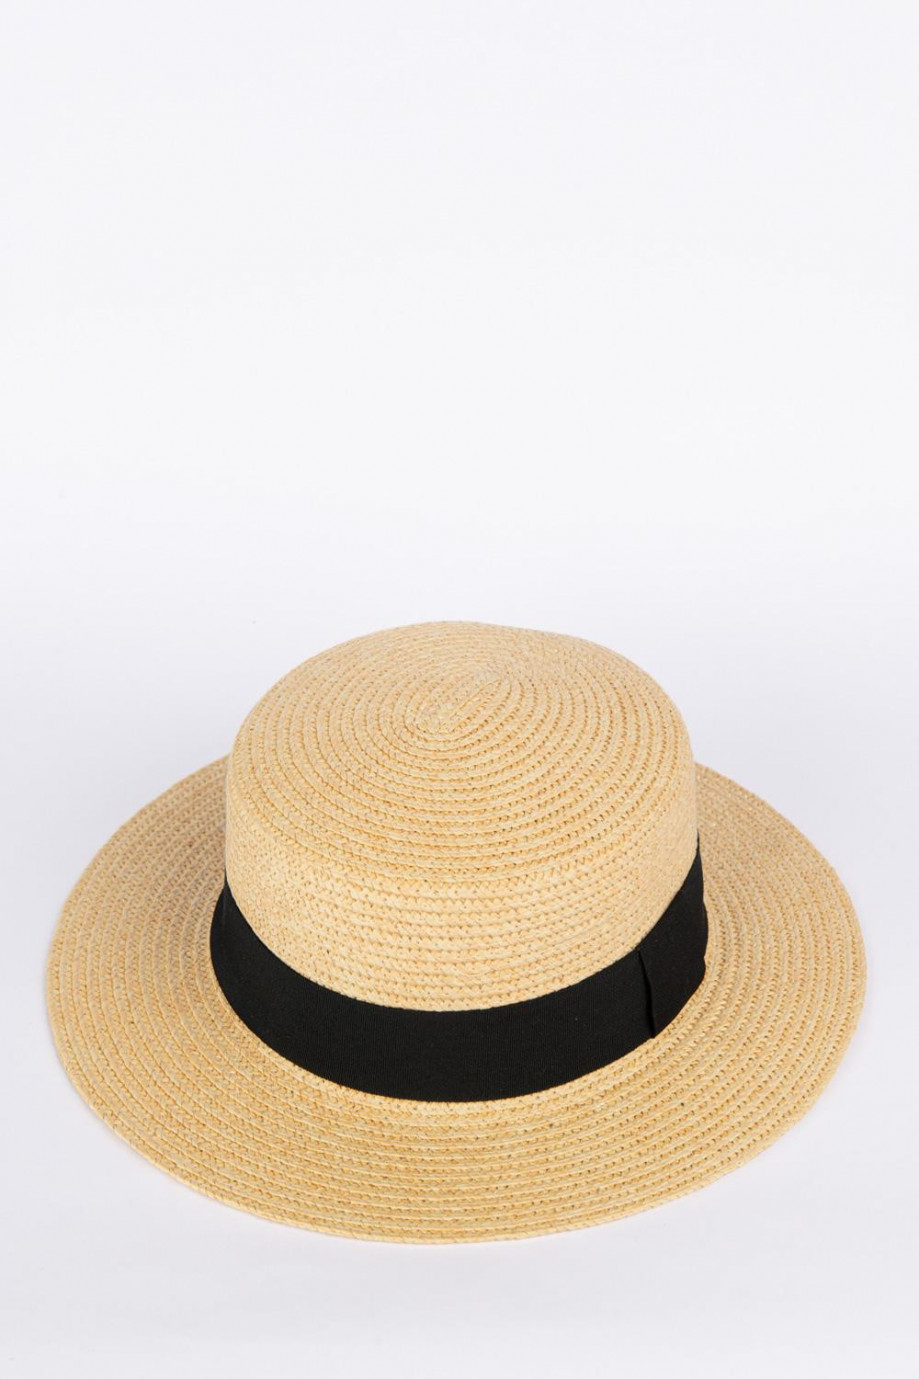 Sombrero kaky claro con cinta negra decorativa y ala plana